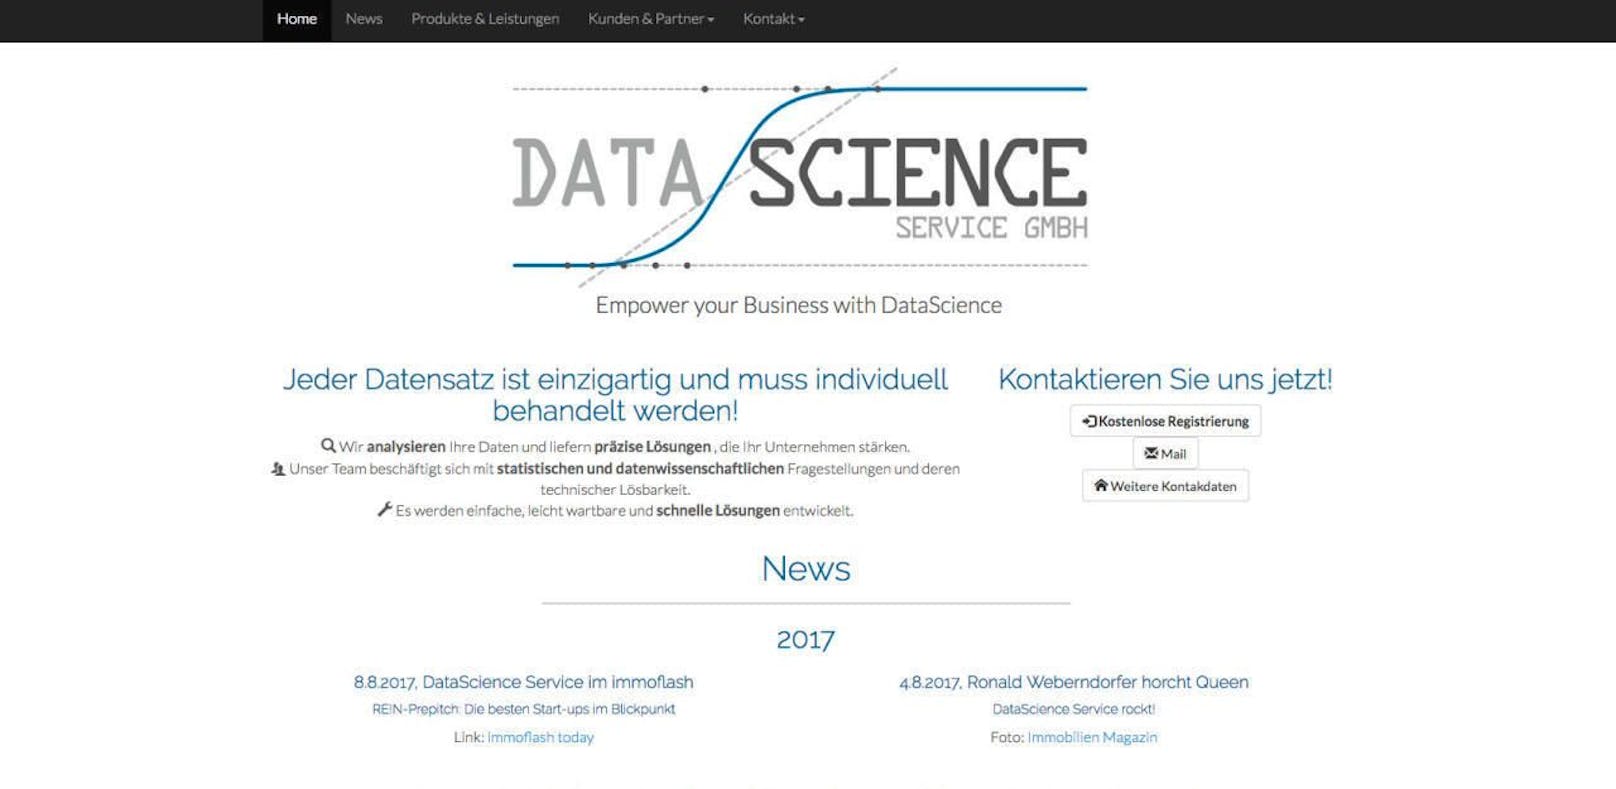 DataScience Service